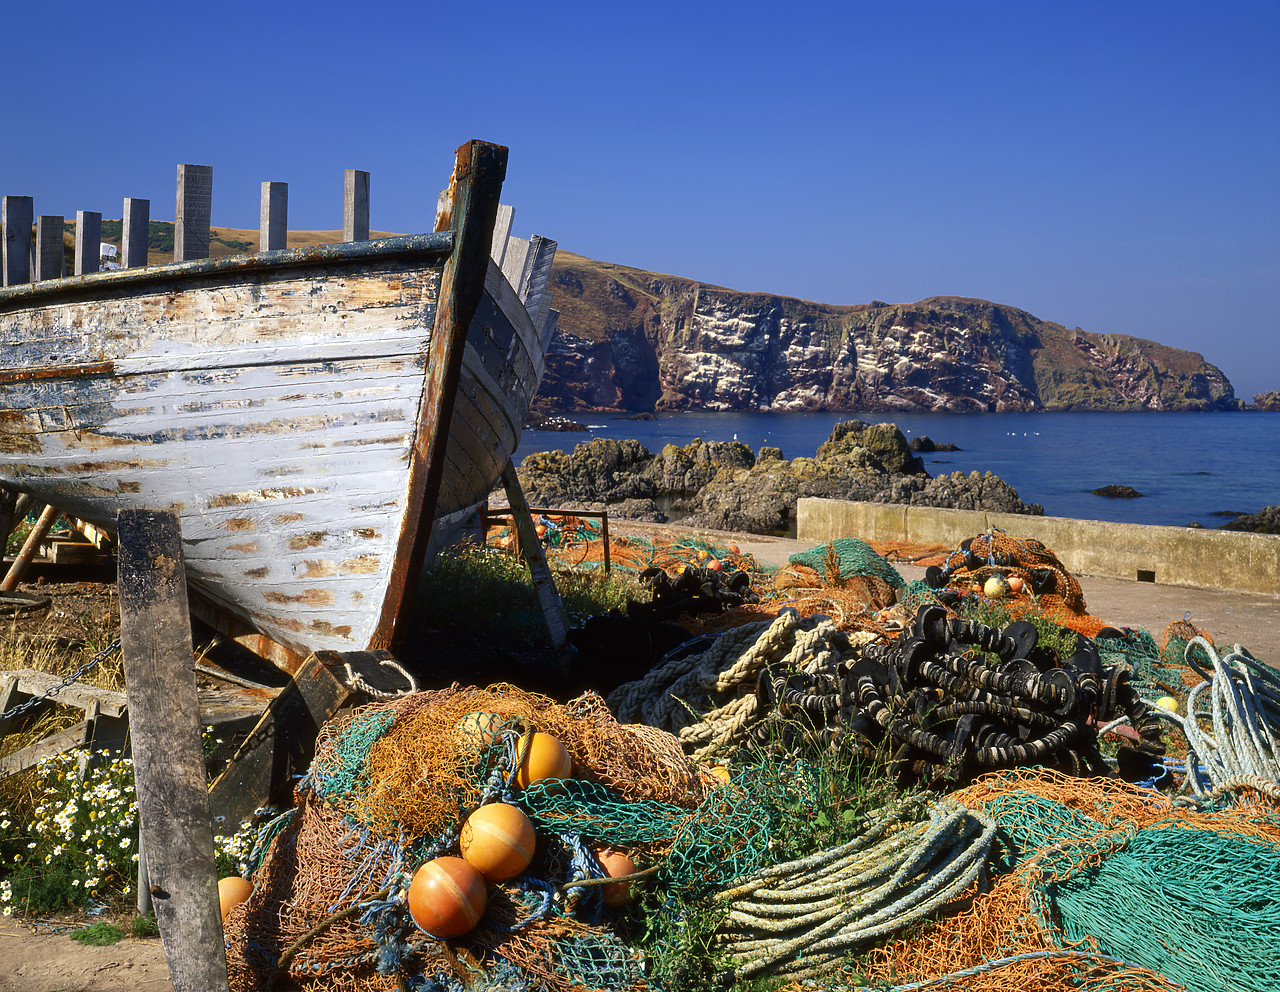 #955609-1 - Fishing Nets & Boat, St. Abb's Harbour, Borders, Scotland